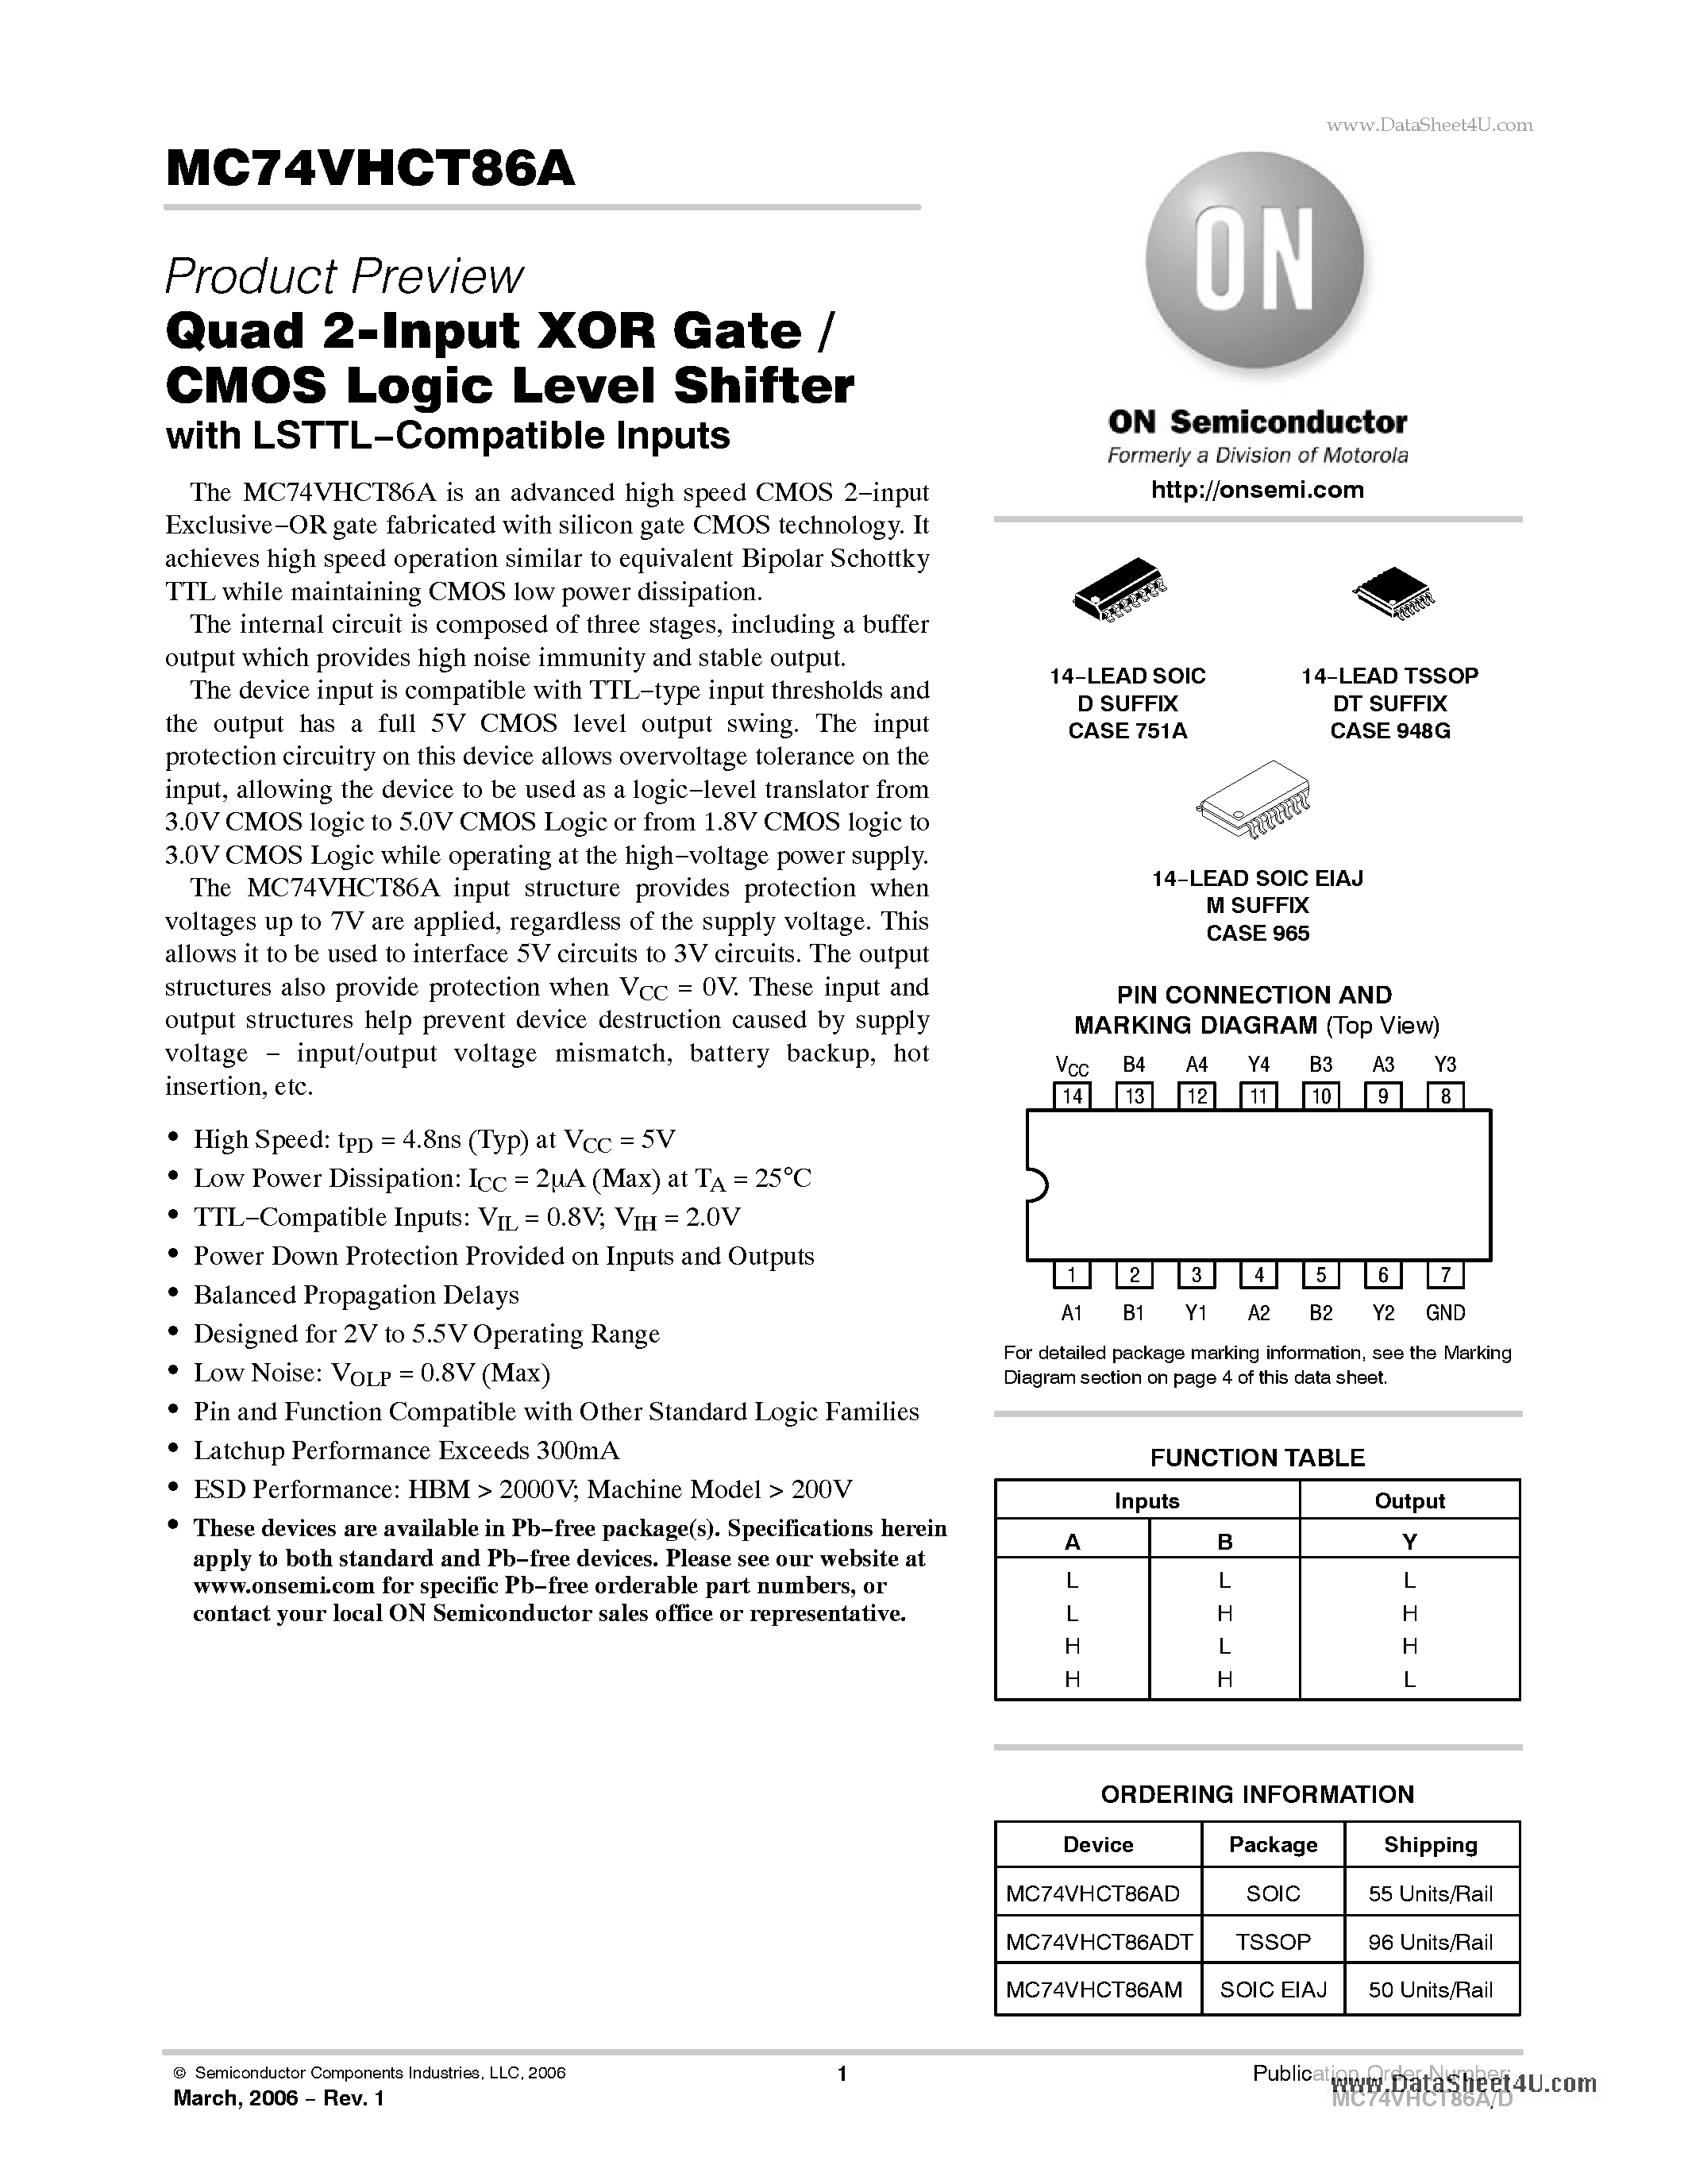 Даташит MC74VHCT86A - Quad 2-Input XOR Gate / CMOS Logic Level Shifter страница 1